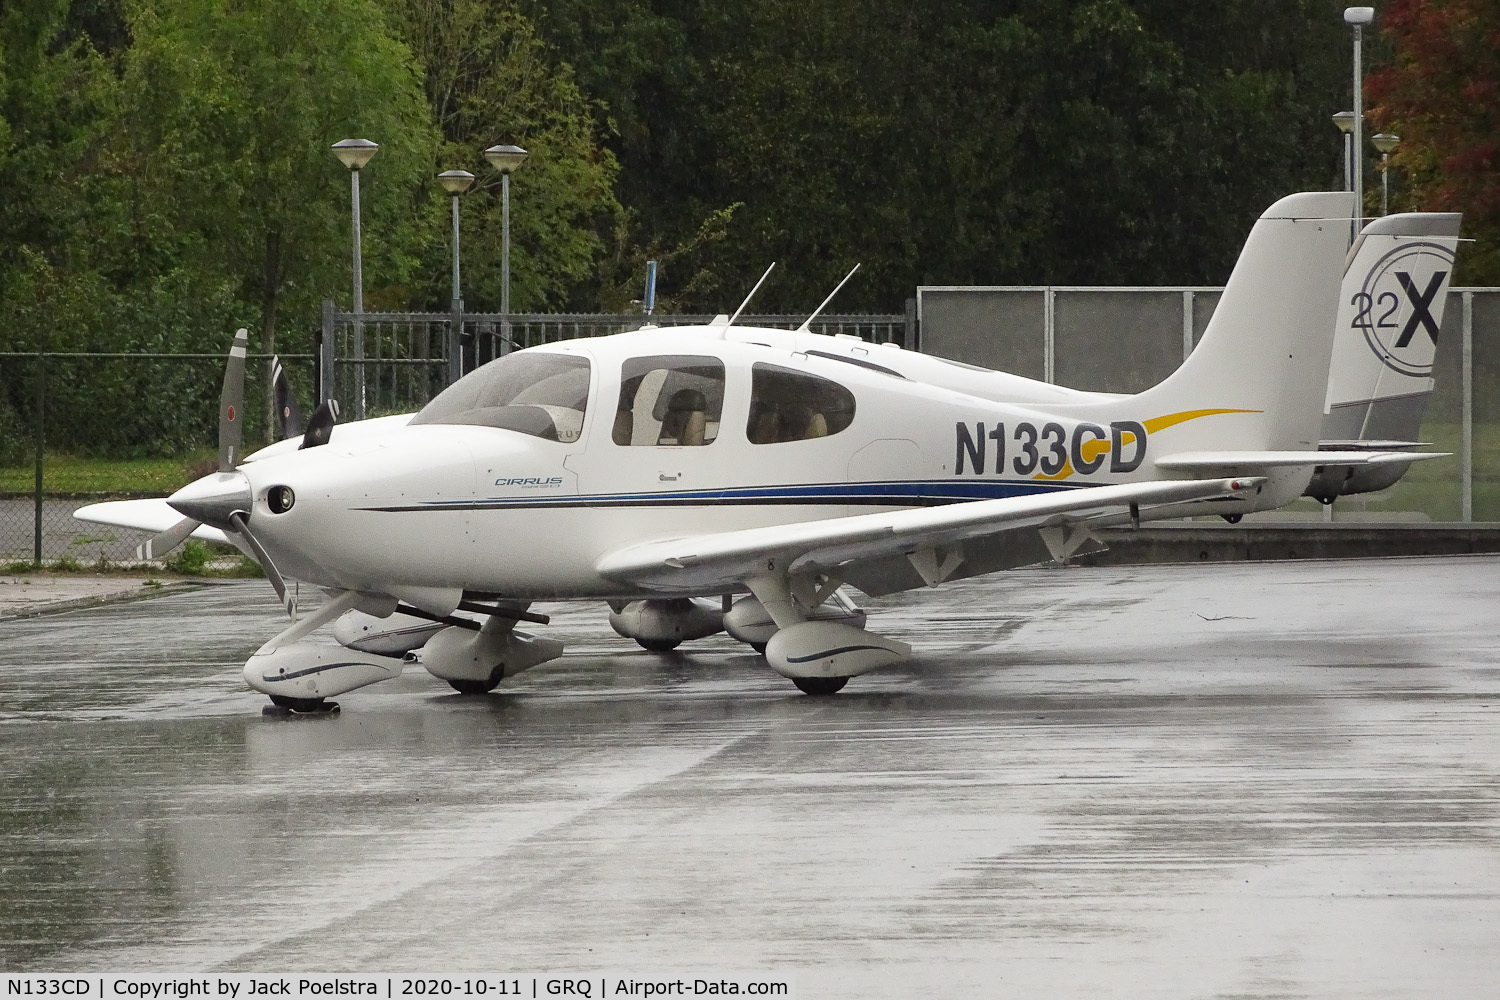 N133CD, 2000 Cirrus SR20 C/N 1025, At ramp of General Enterprise at Groningen airport